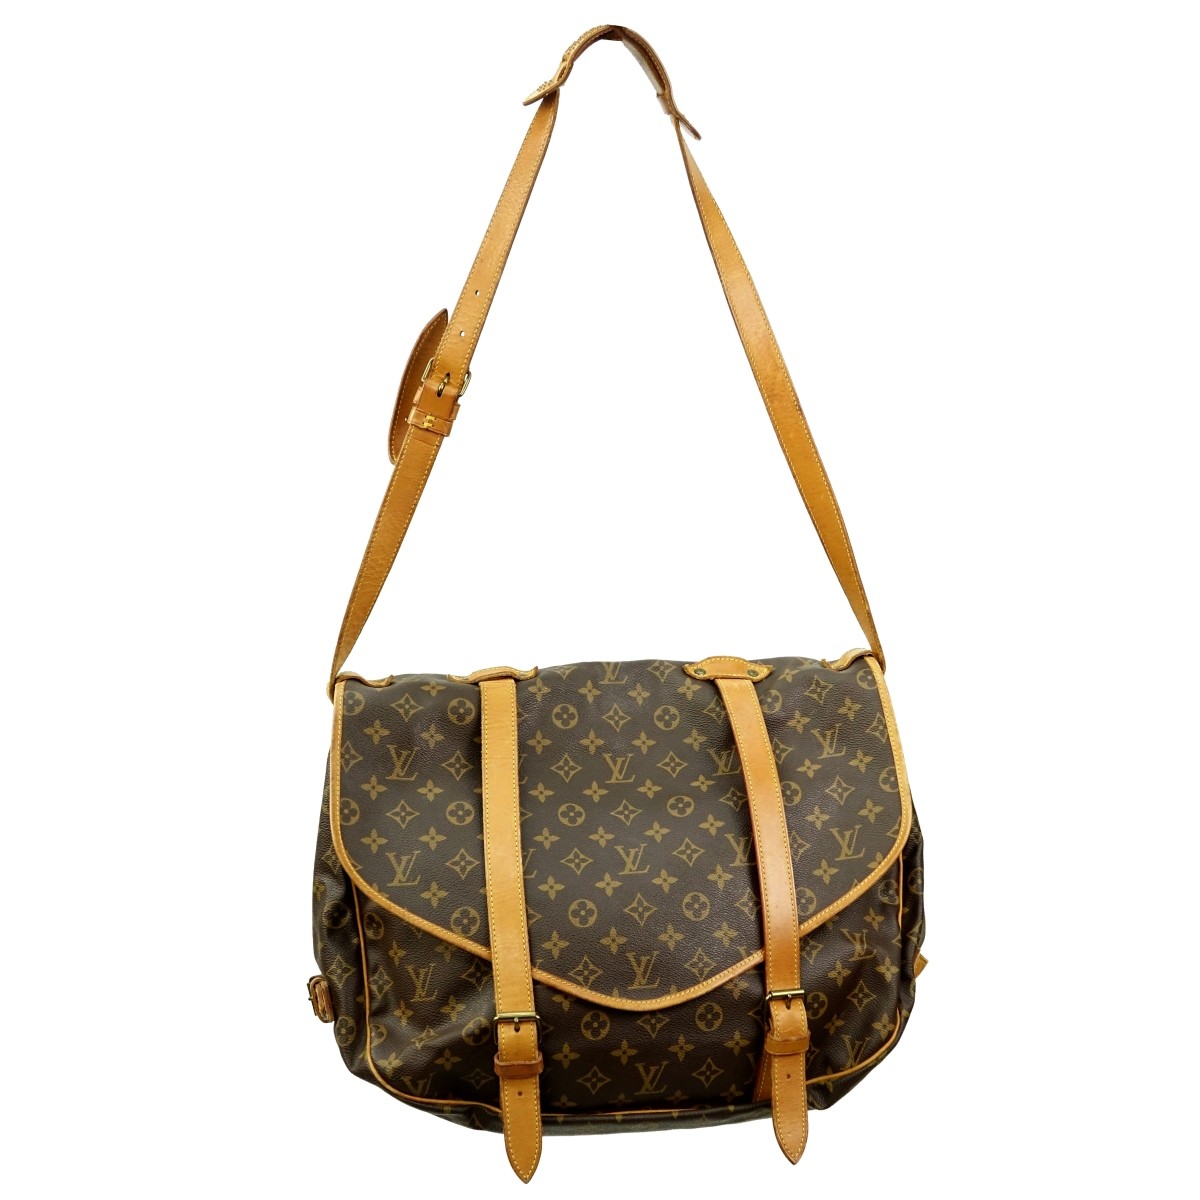 Louis Vuitton Duffle Bag For Sale In Murrieta, Ca